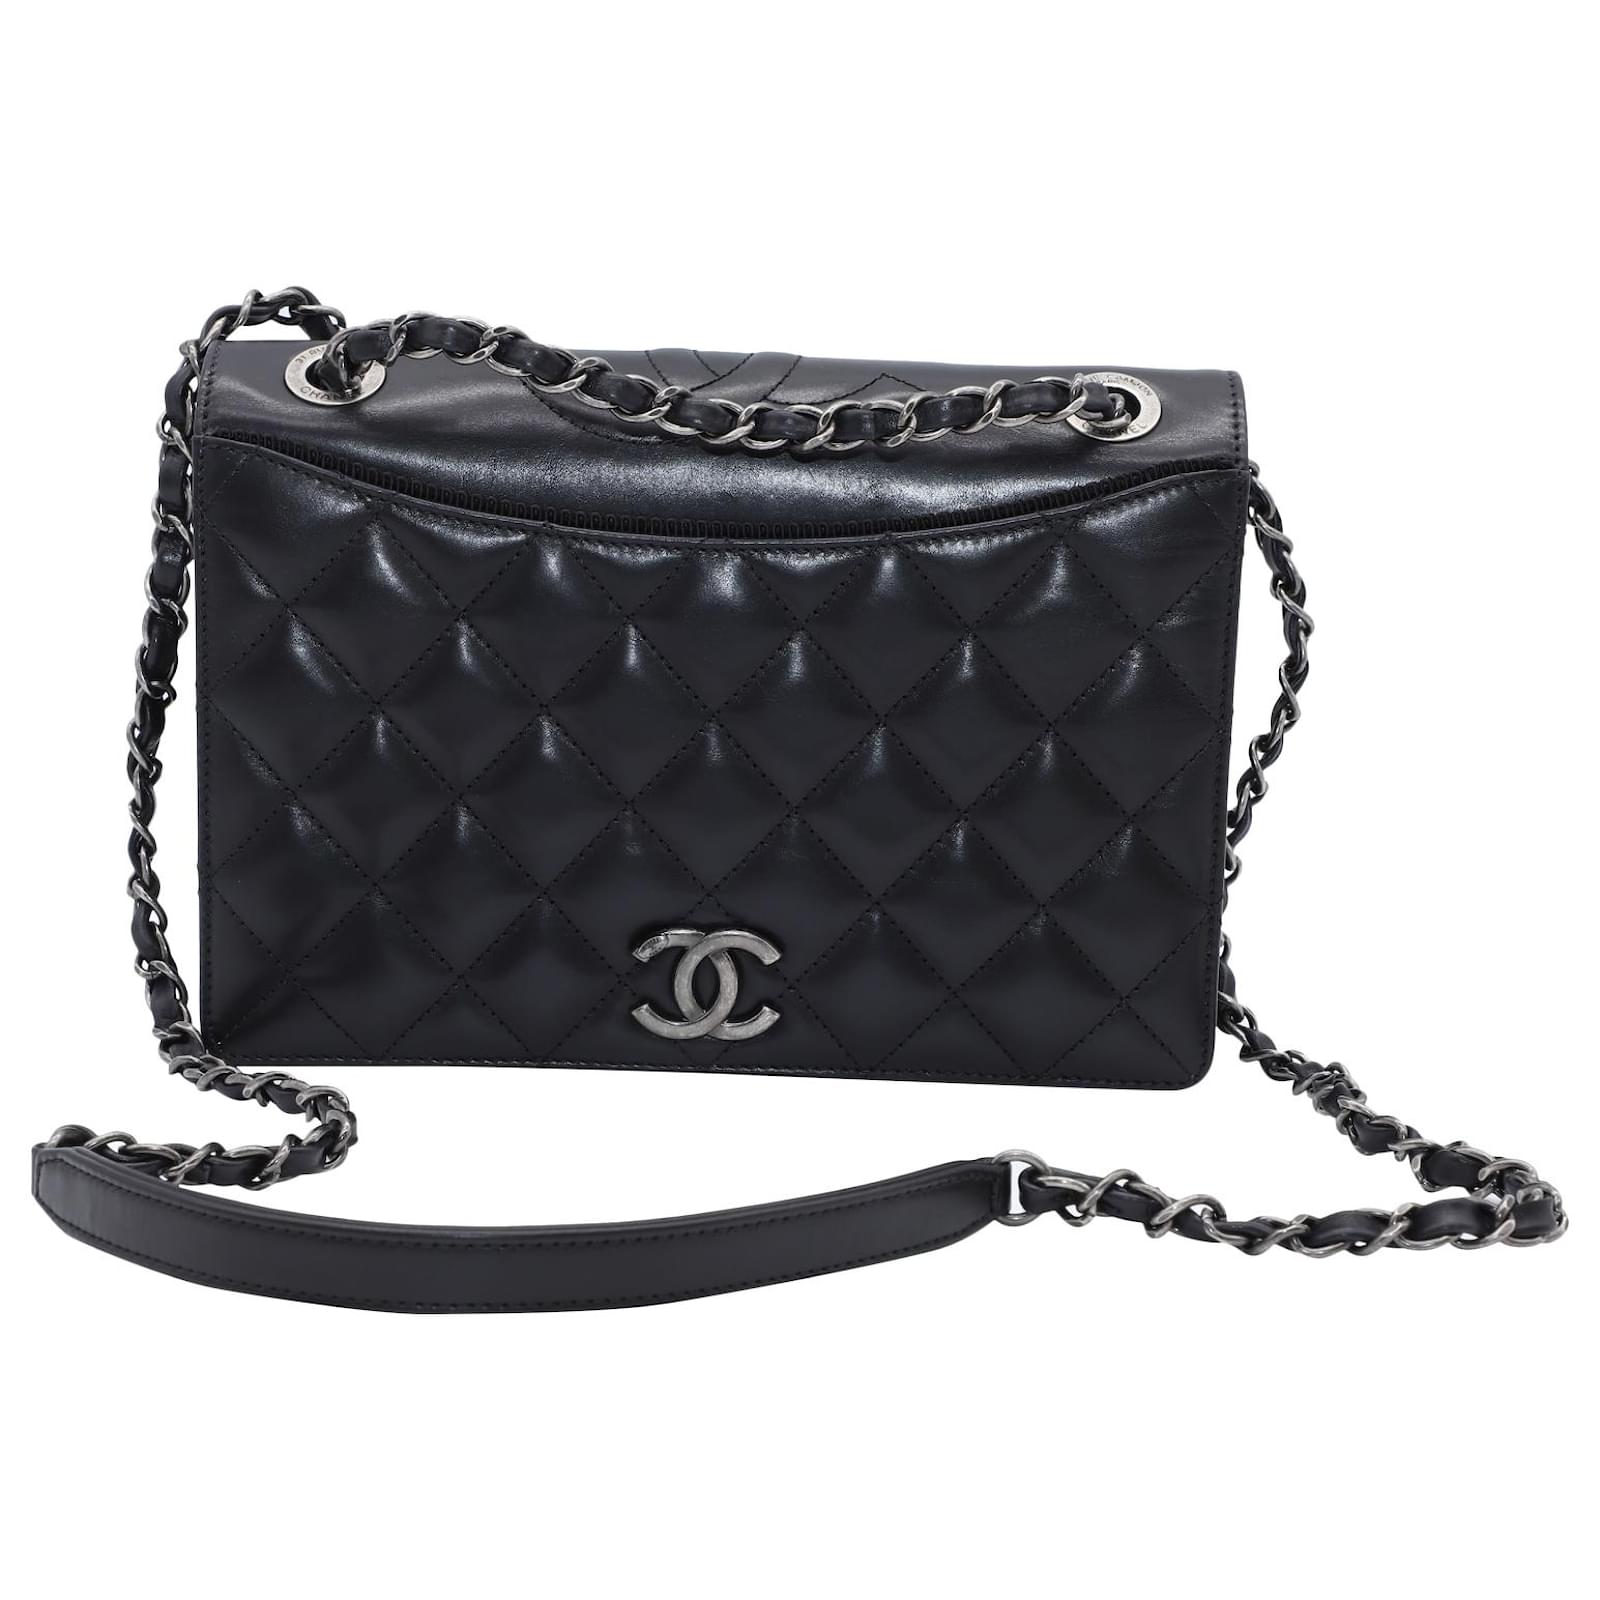 Chanel Medium Ballerine Quilted Flap Bag in Black Grosgrain